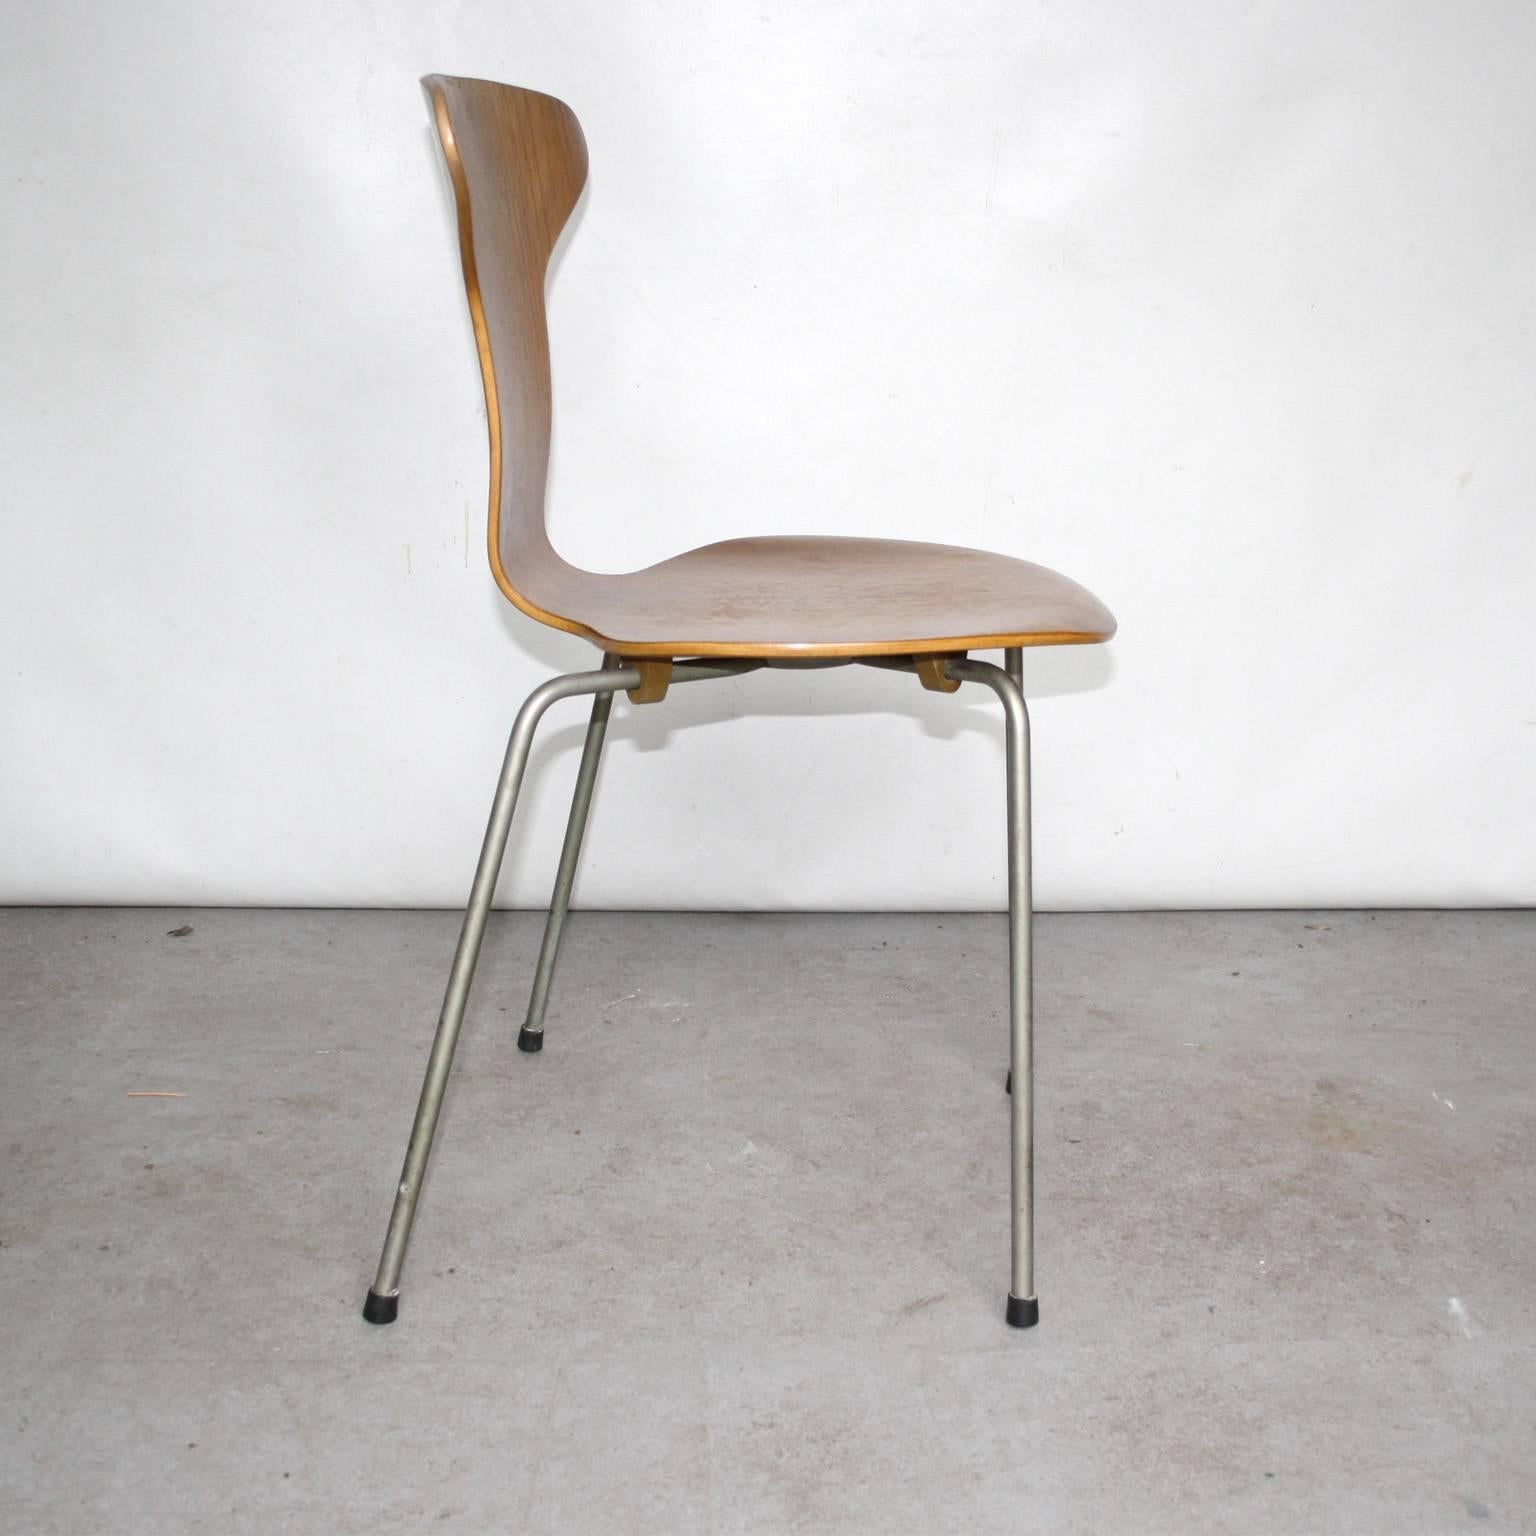 Danish Arne Jacobsen for Fritz Hansen “Mosquito” Dining Chair For Sale